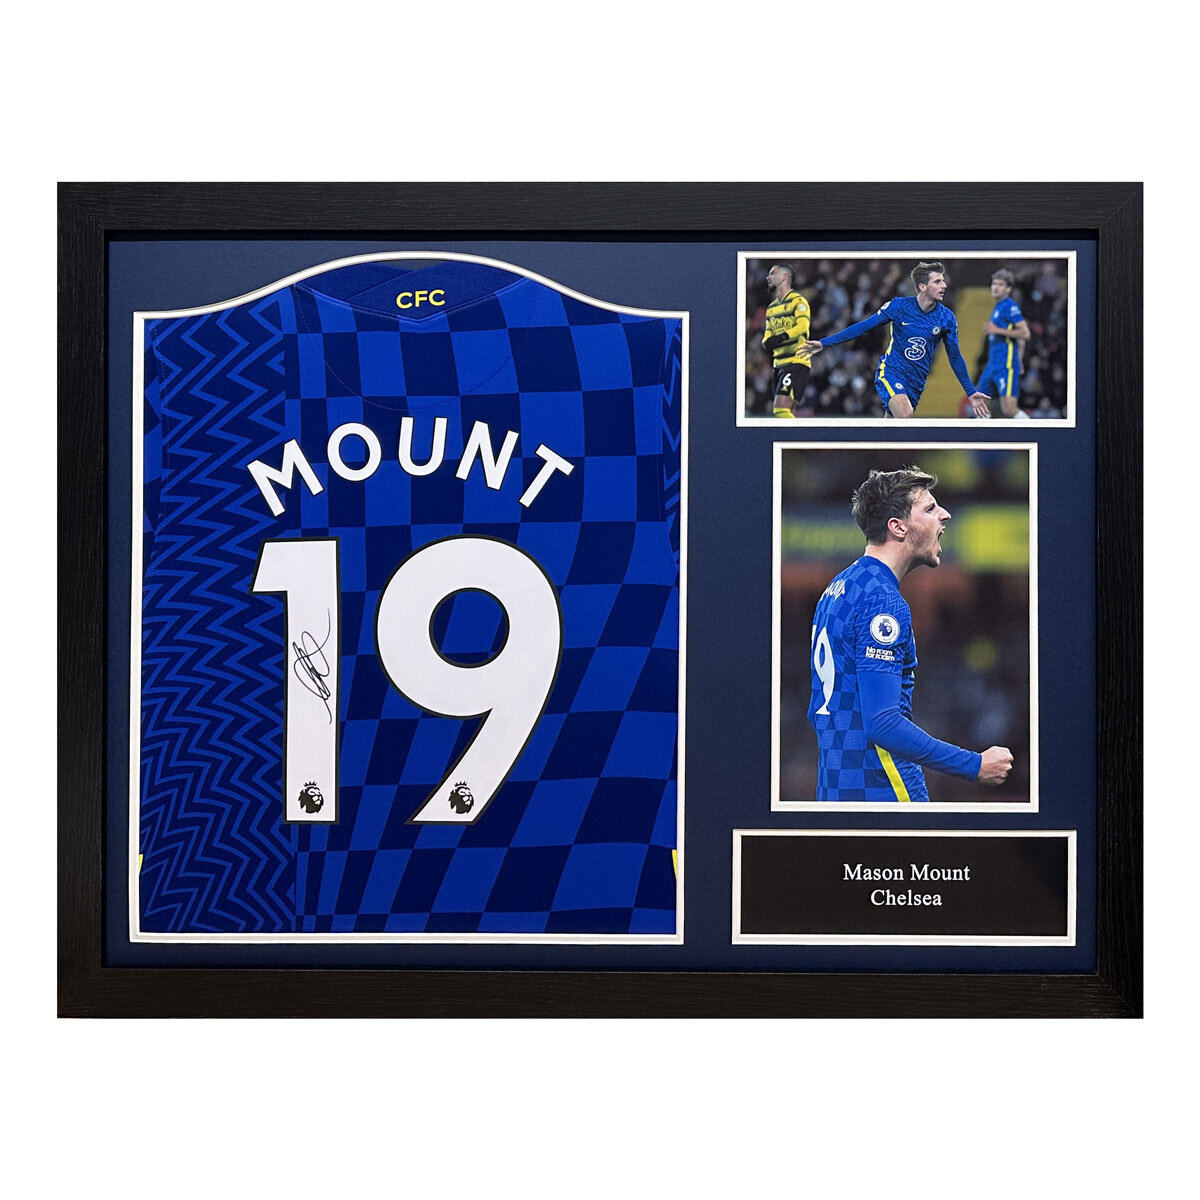 Mason Mount Signed Framed Chelsea Football Shirt